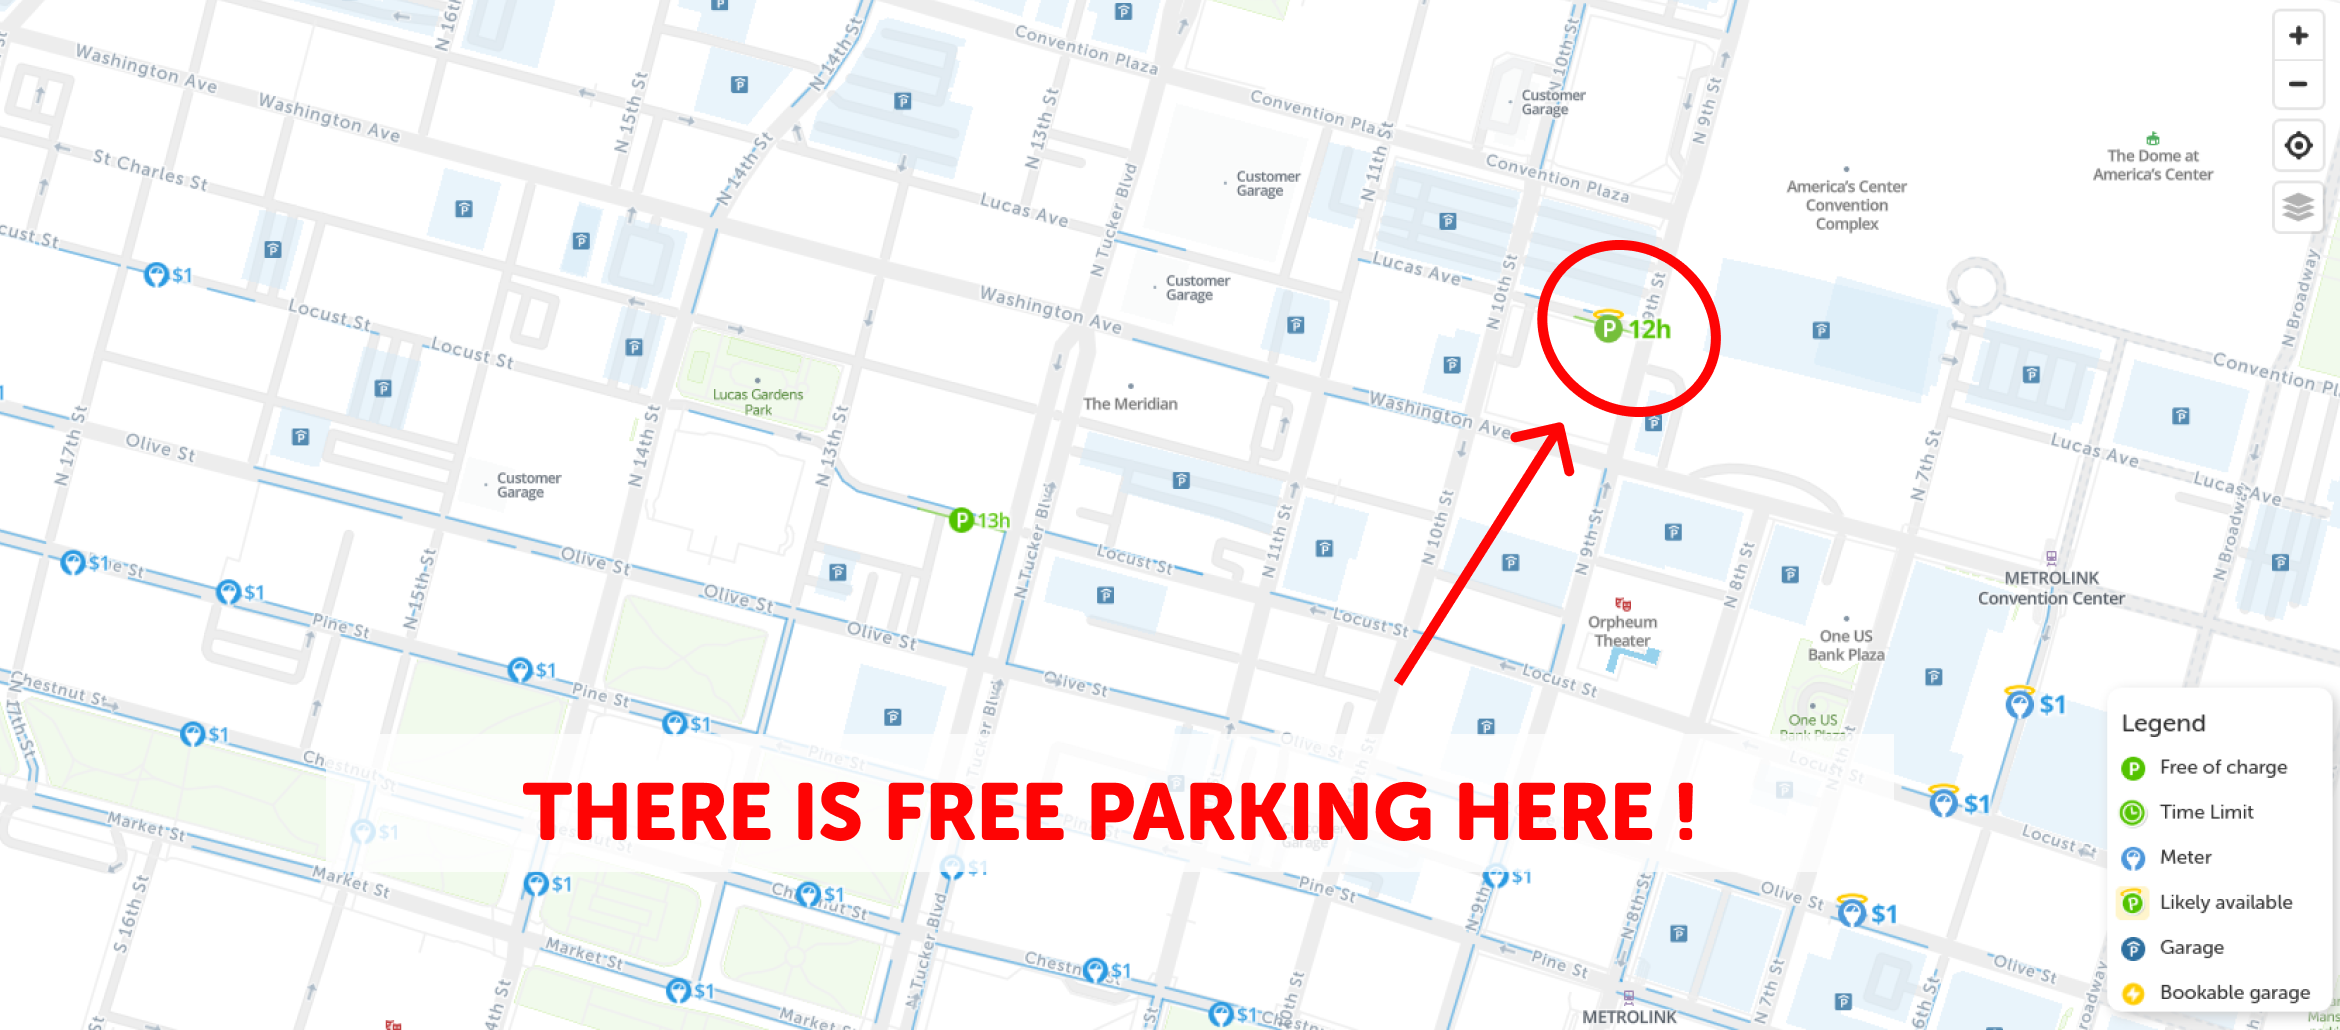 map of free parking in St. louis - SpotAngels